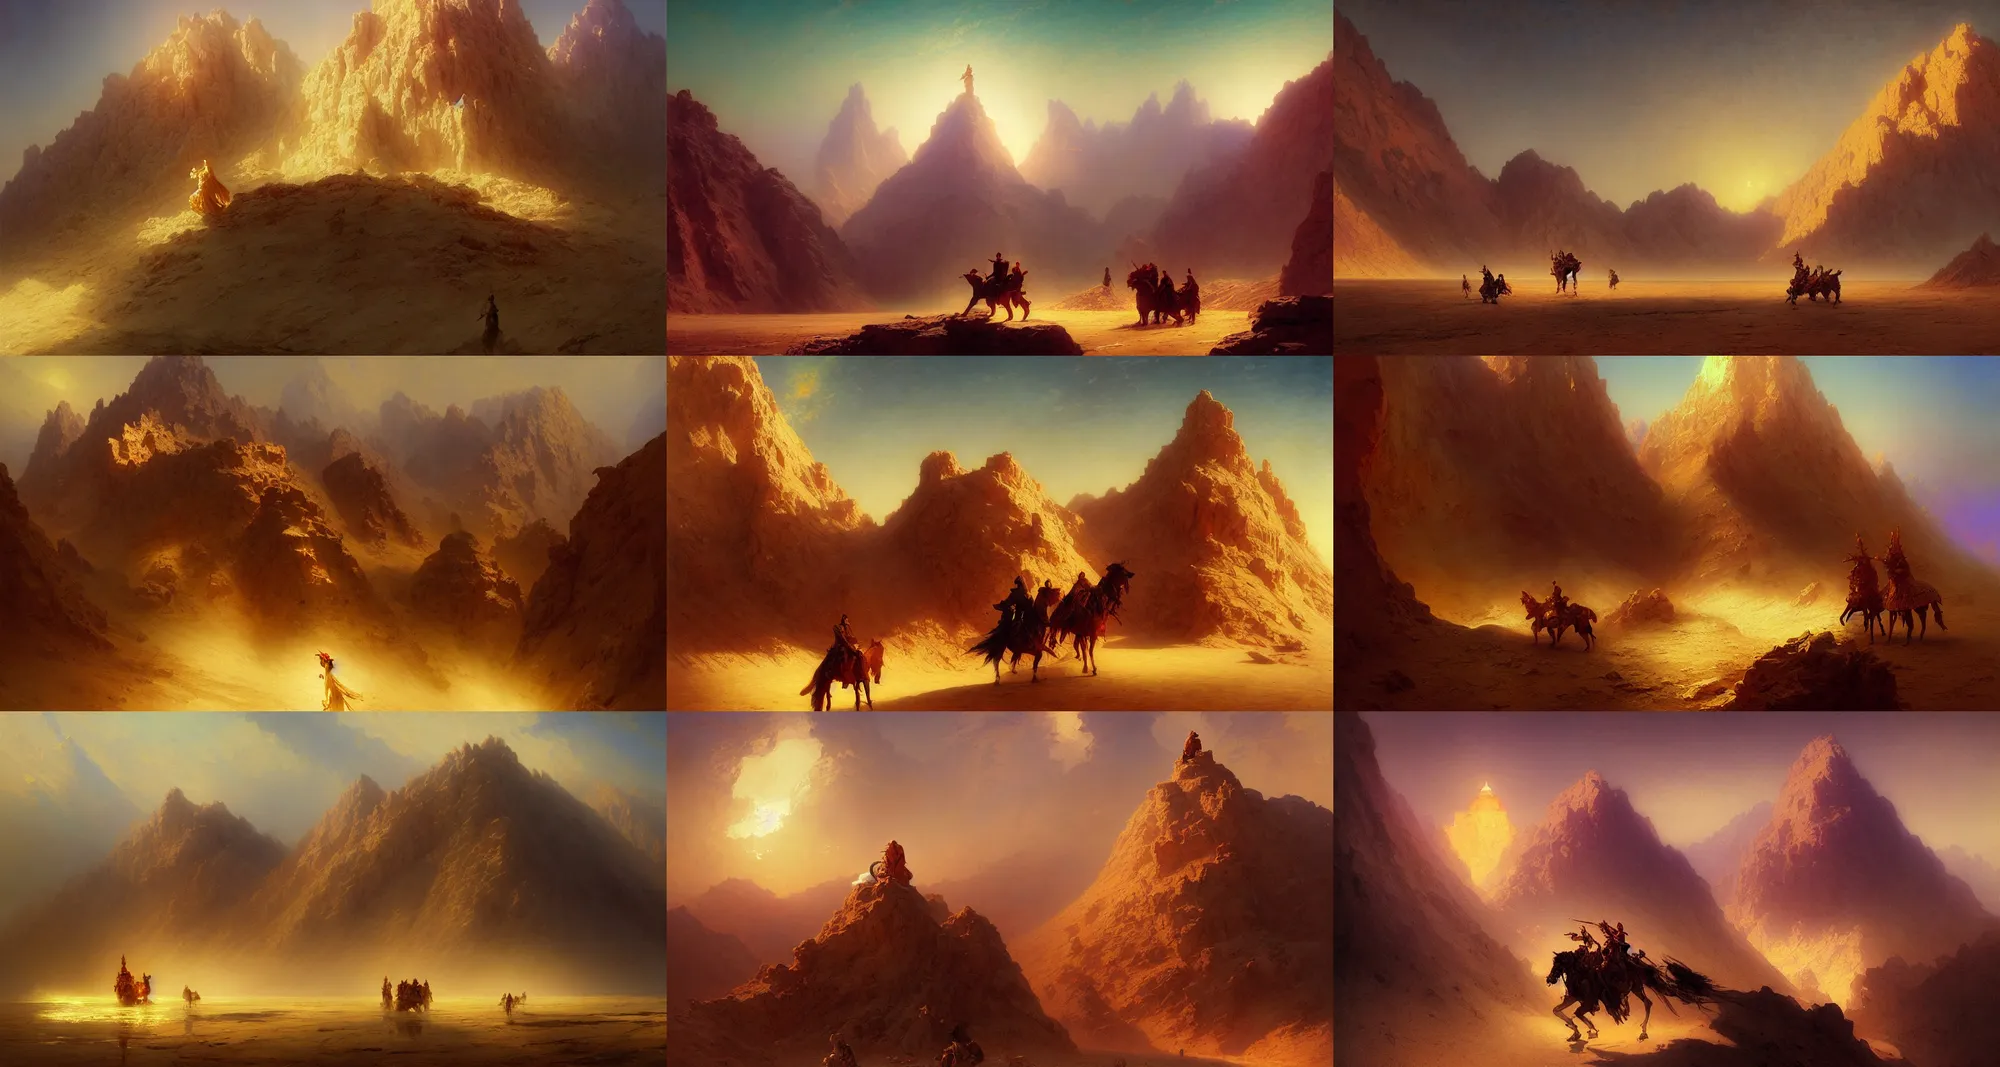 Prompt: golden mountain in the desert, fantasy, art by joseph leyendecker, ivan aivazovsky, ruan jia, reza afshar, marc simonetti